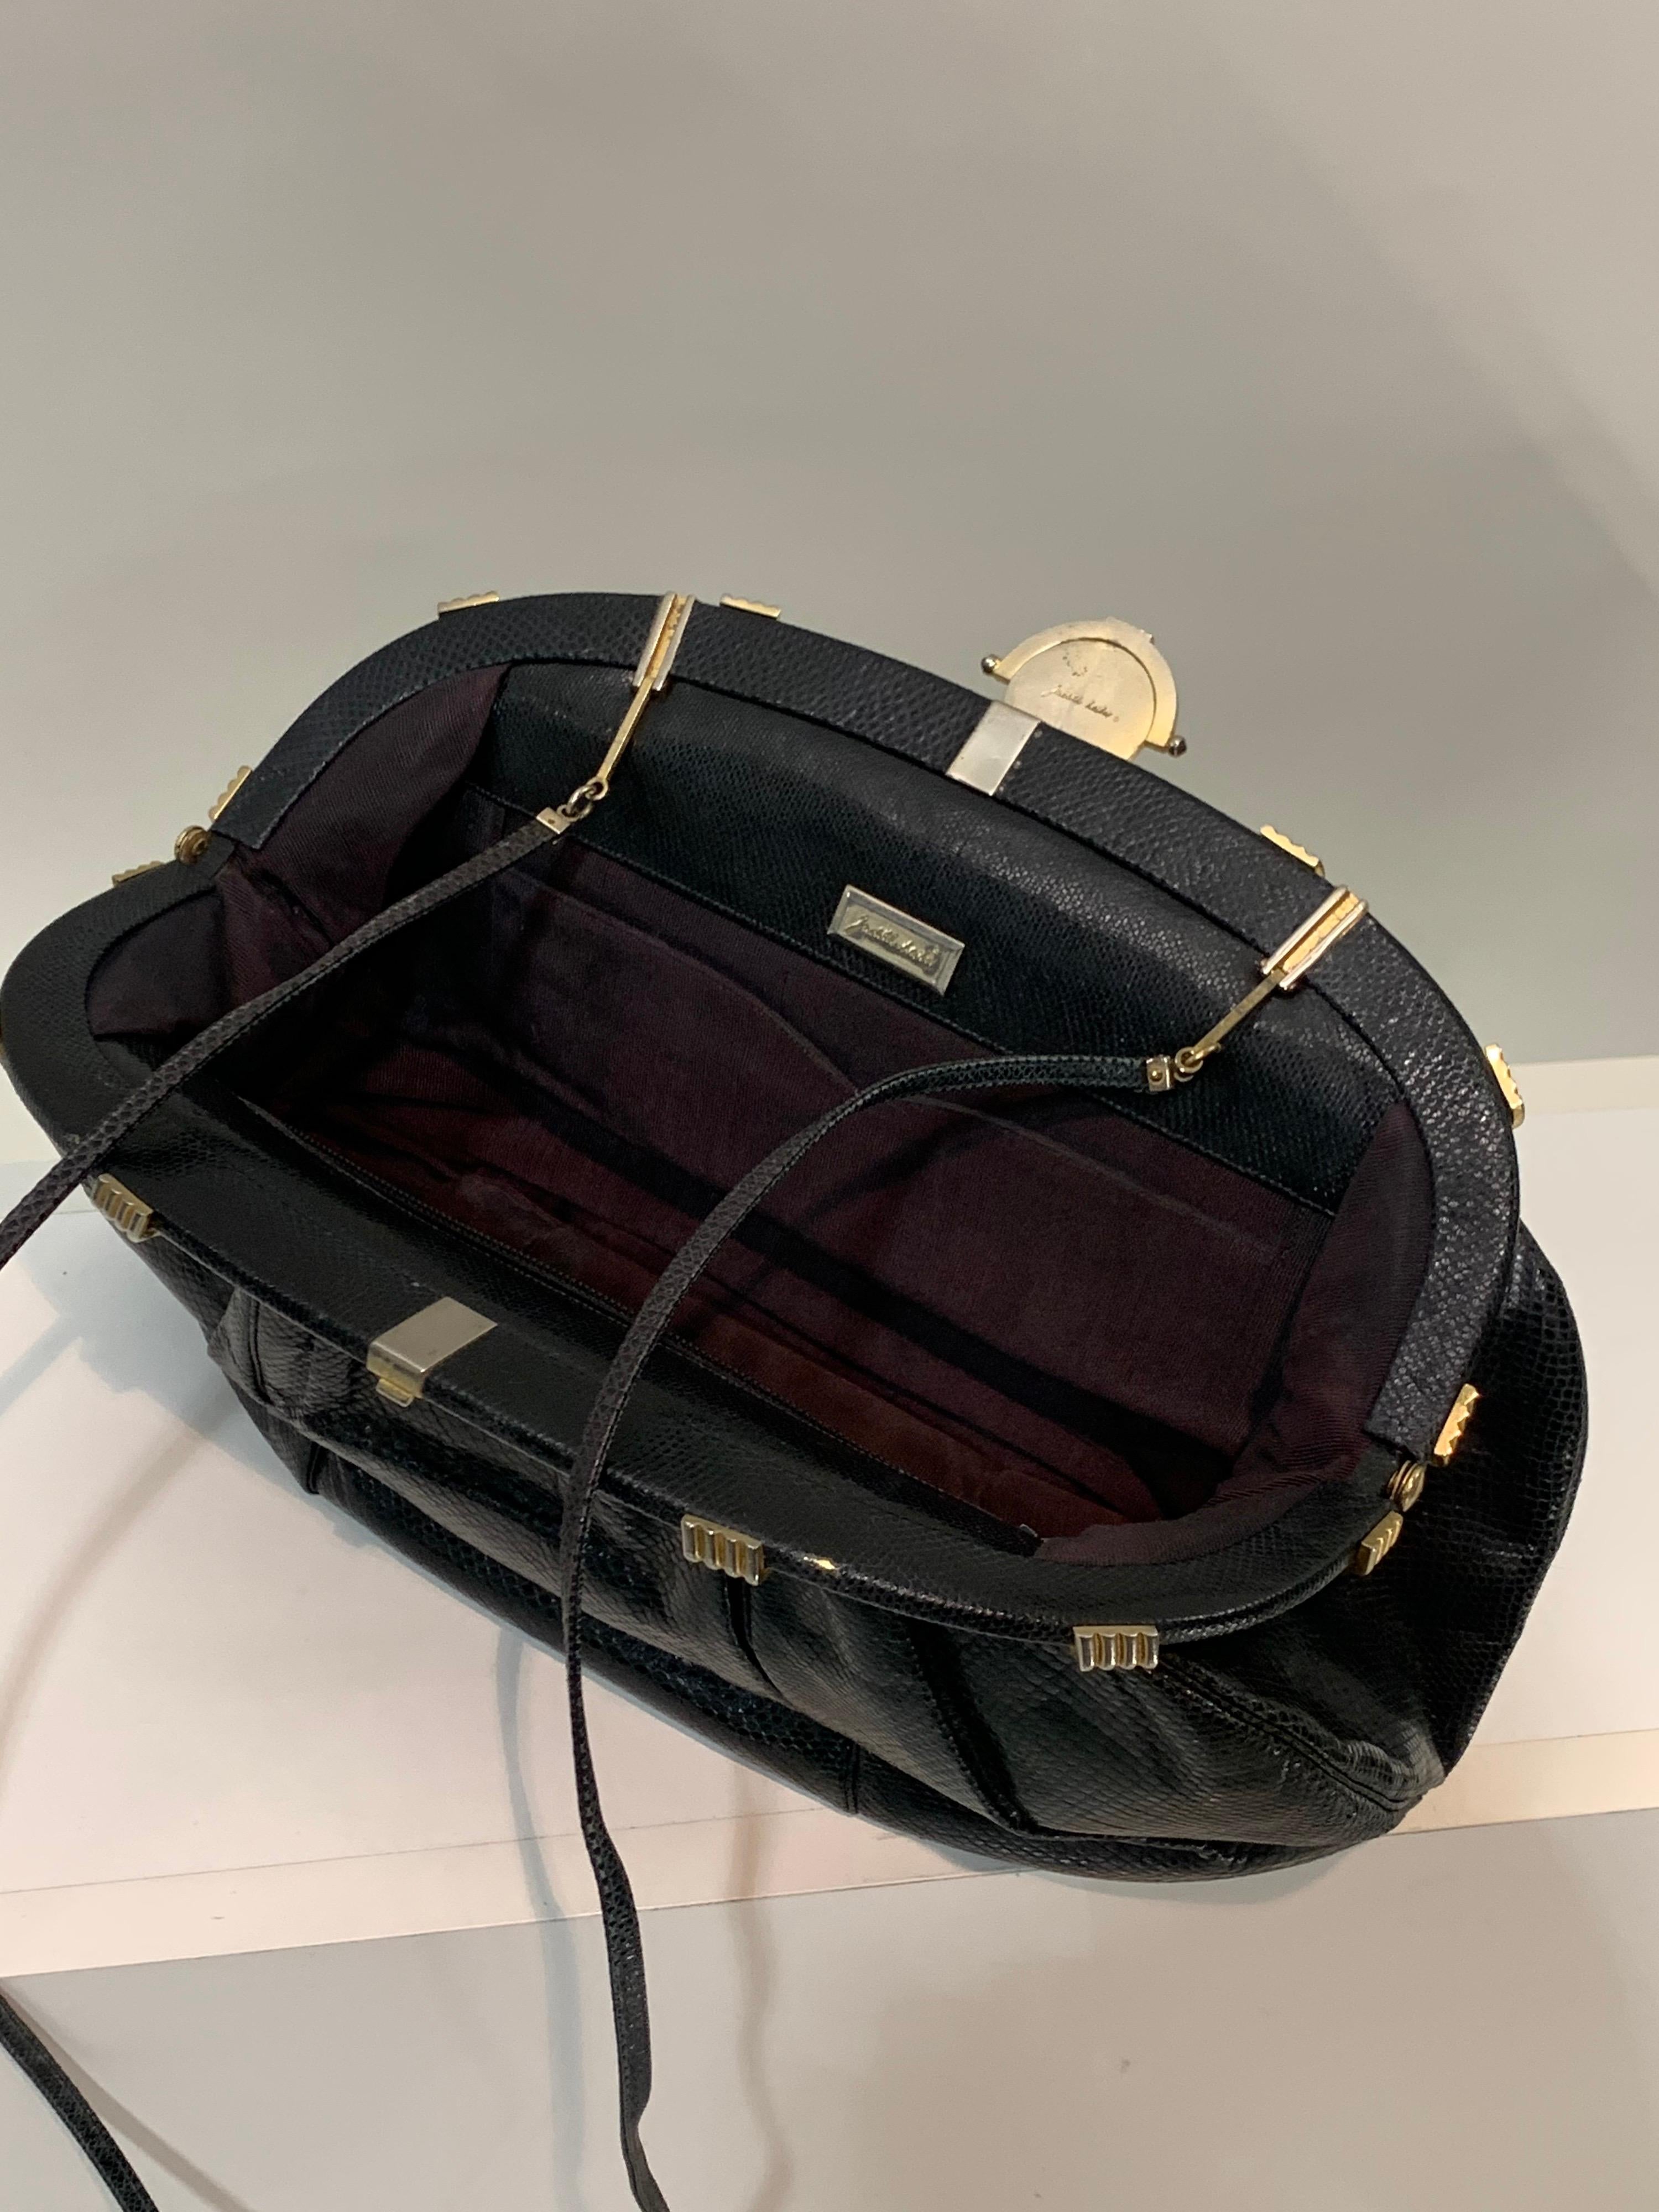 1980s Judith Leiber Black Lizard Convertible Clutch Handbag w/ Obsidian Cameo For Sale 4